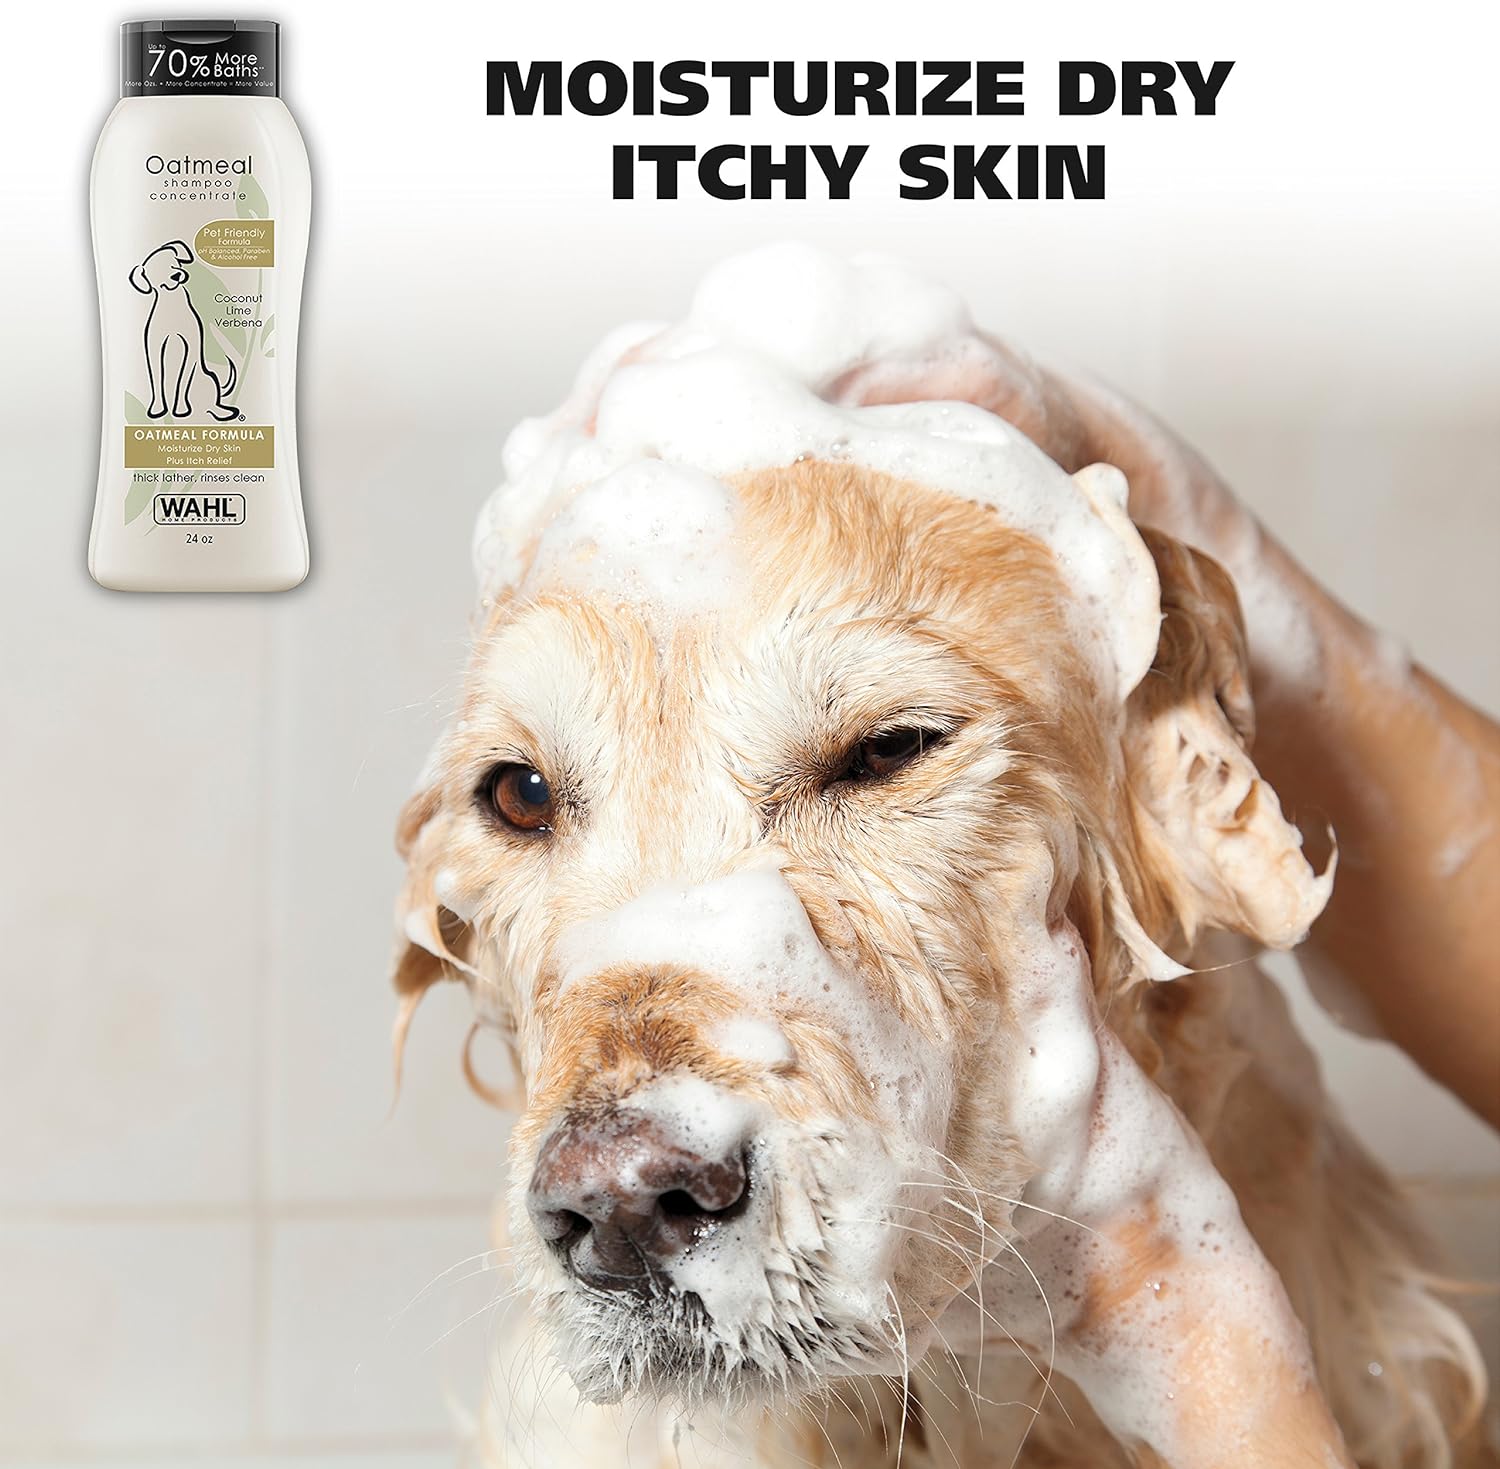 USA Dry Skin & Itch Relief Pet Shampoo for Dogs – Oatmeal Formula with Coconut Lime Verbena & Pet Friendly Formula, 24 Oz - Model 820004A